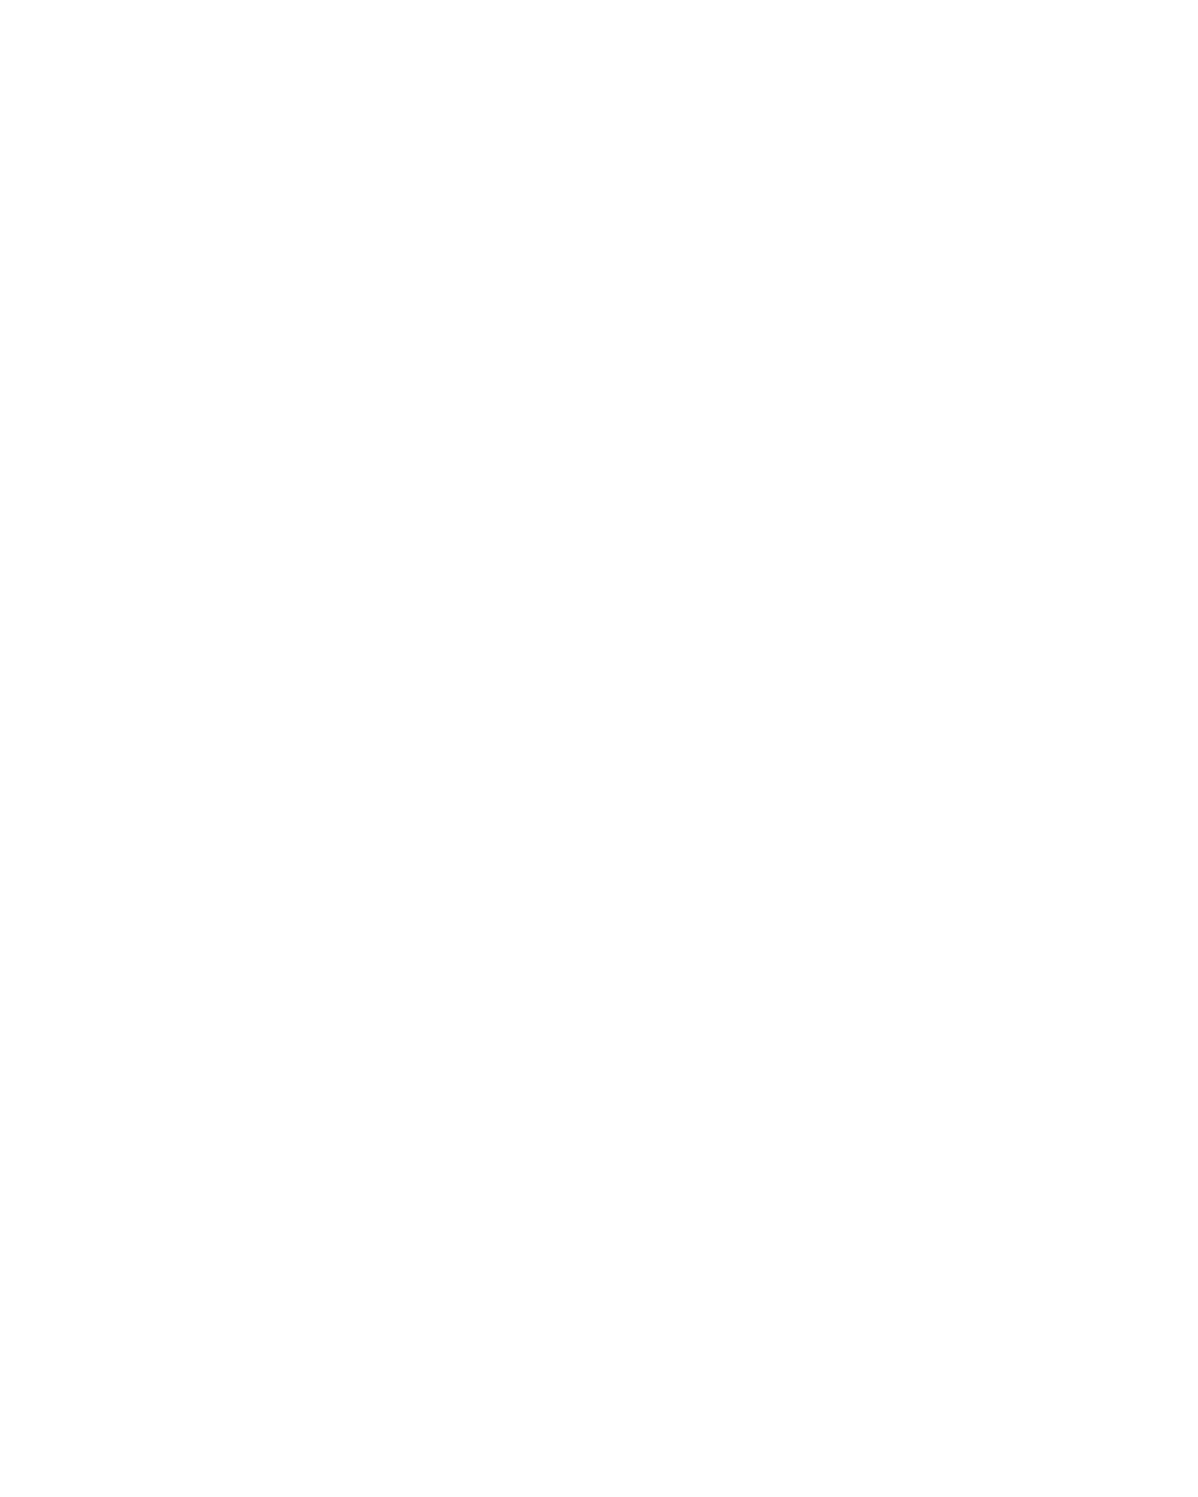 Far Eastern New Century logo pour fonds sombres (PNG transparent)